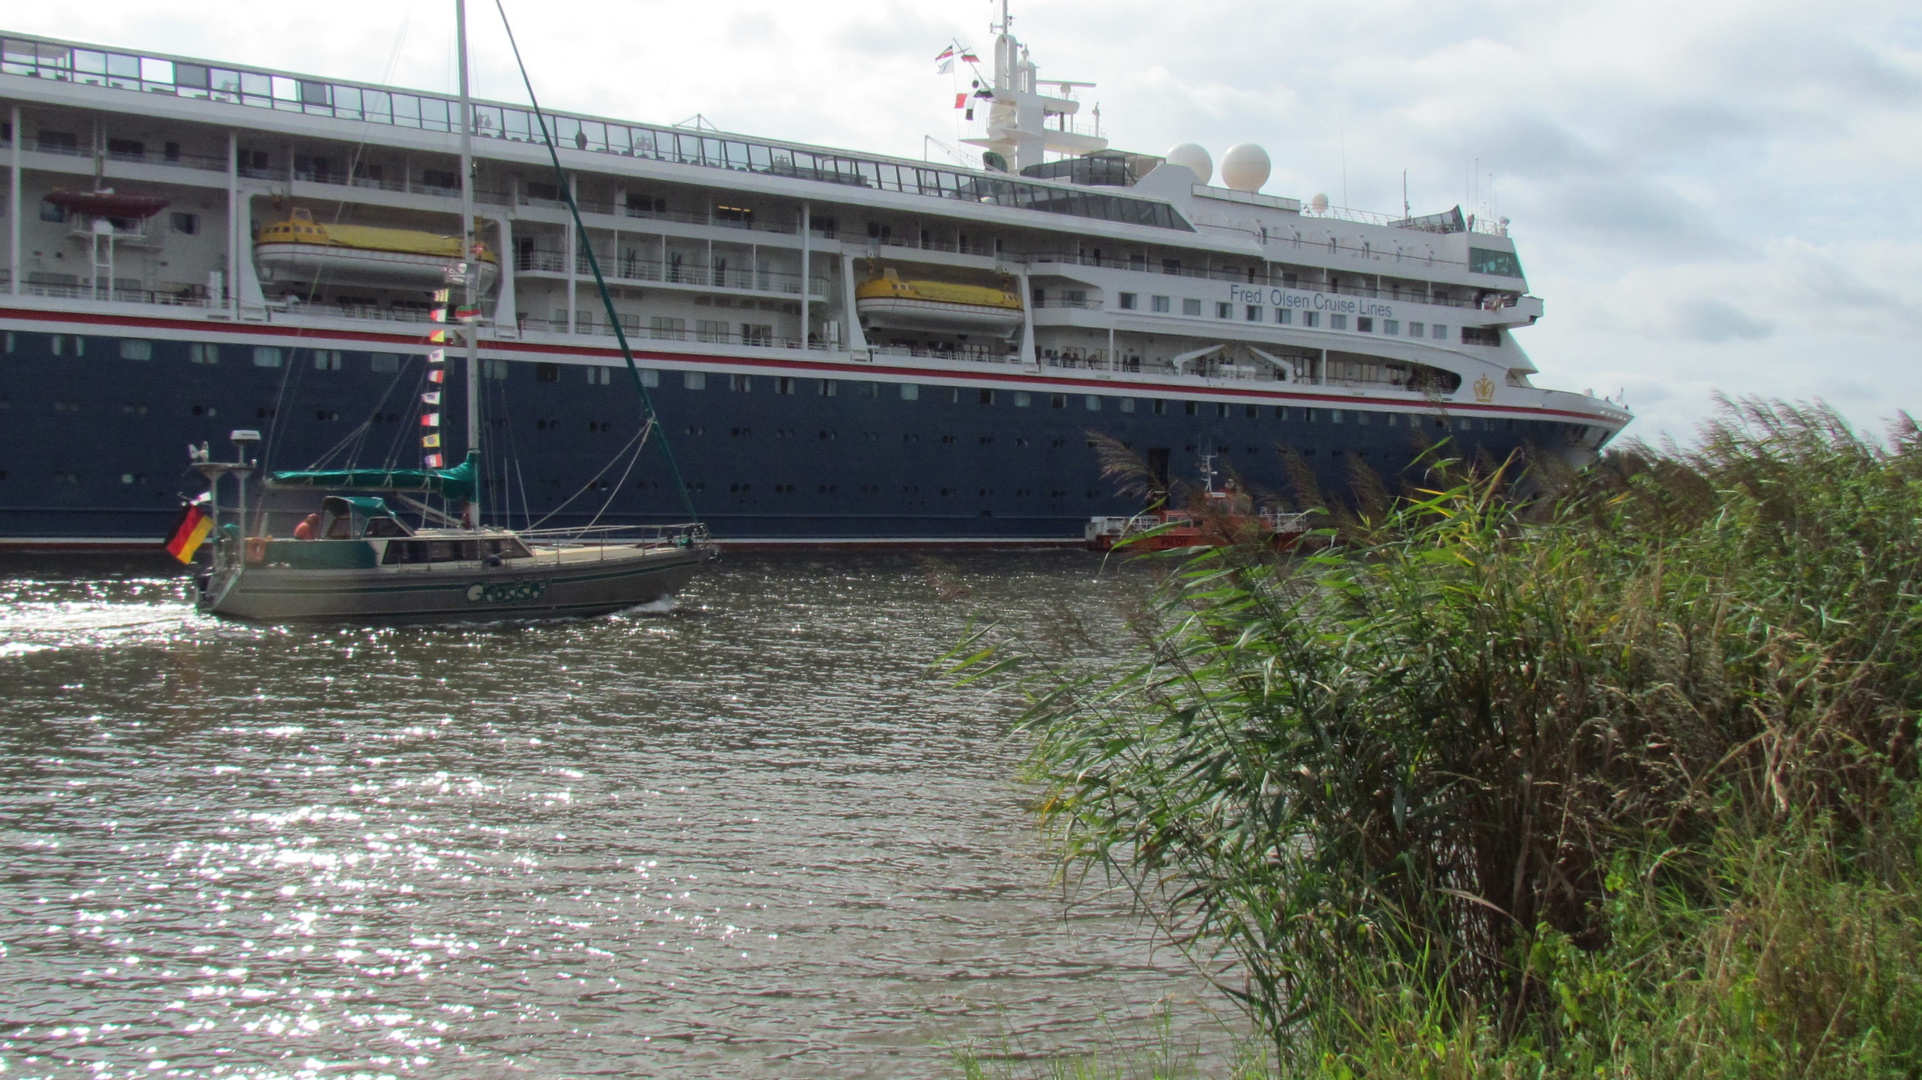 Braemar - Kiel Canal 2019